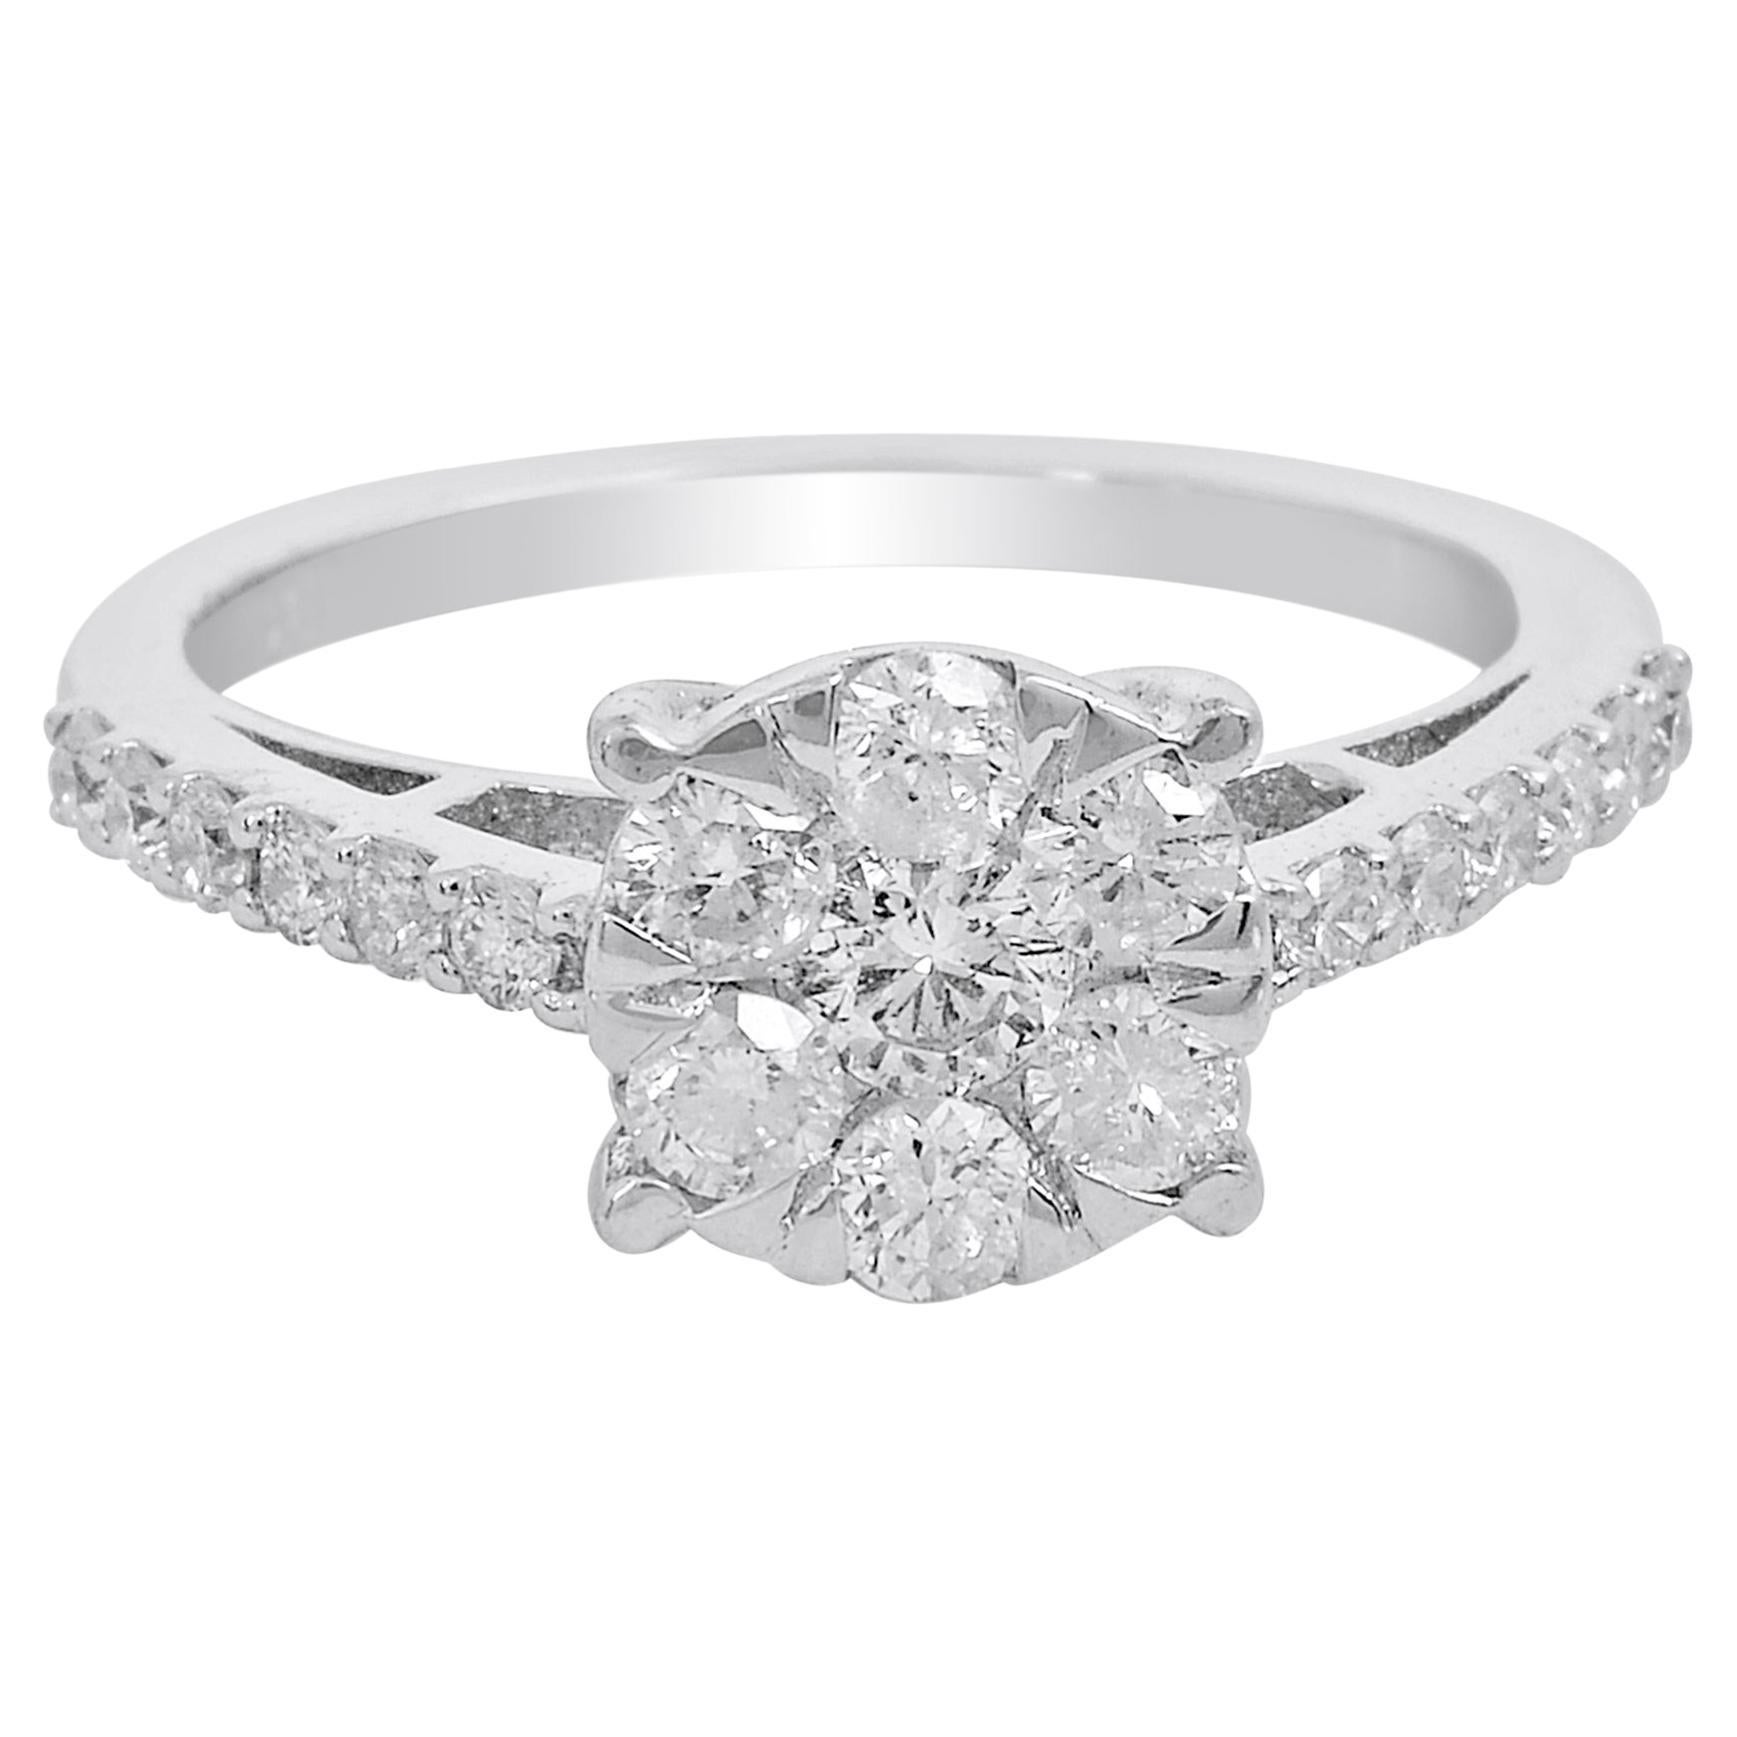 0.95 Carat SI Clarity HI Color Diamond Promise Ring 14 Karat White Gold Jewelry